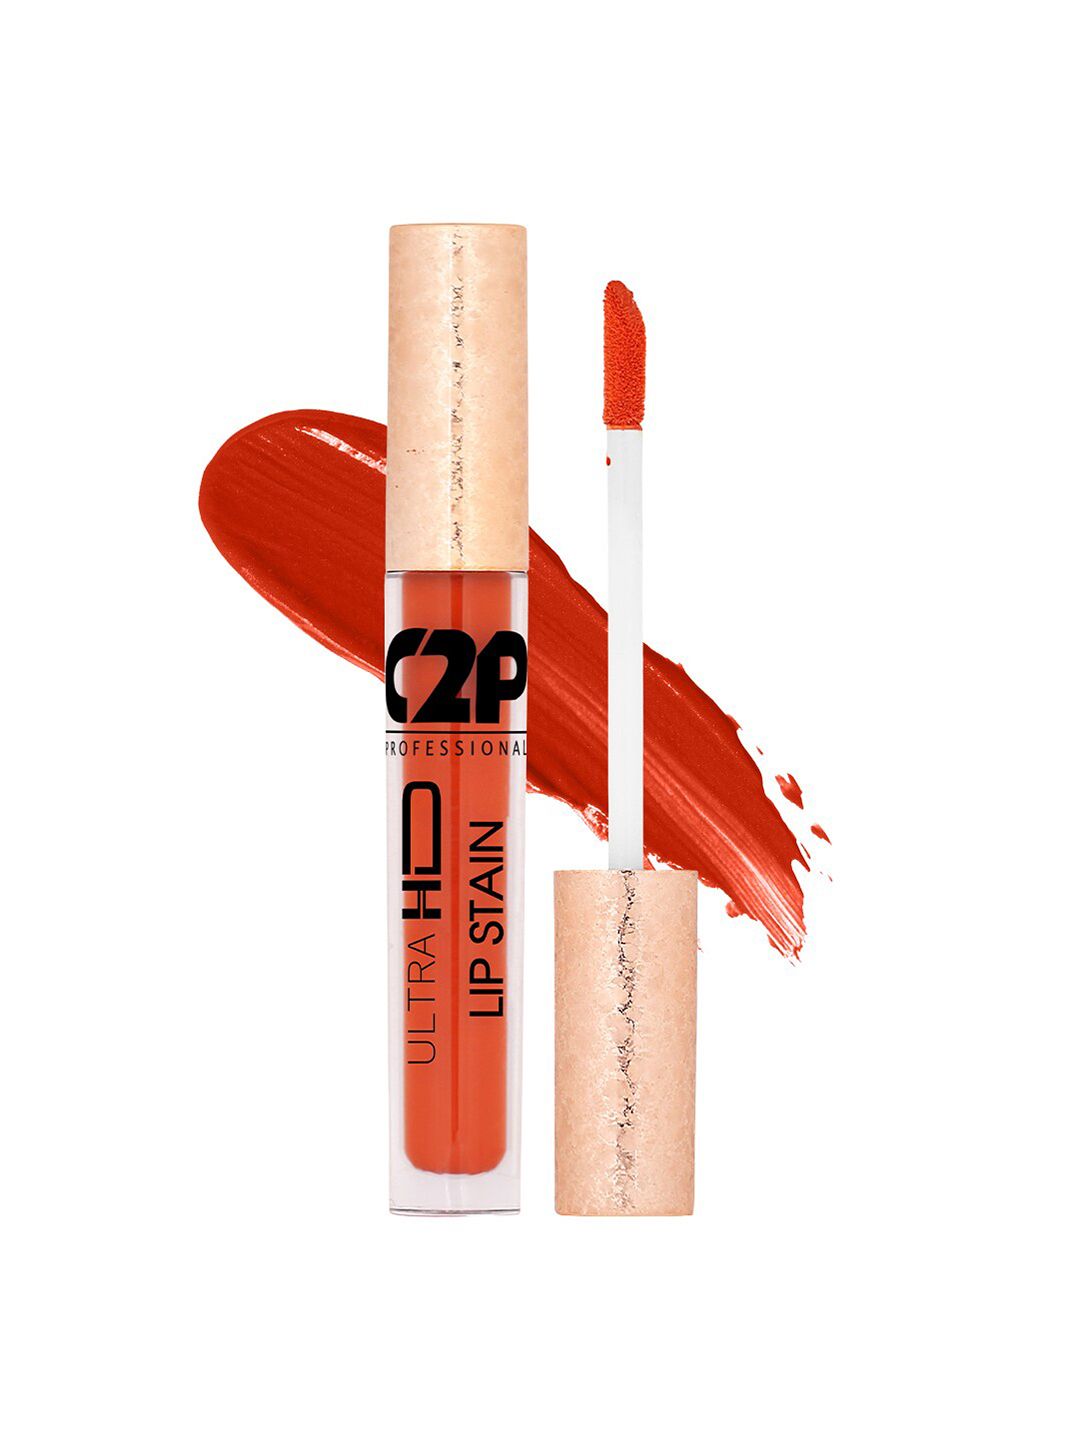 C2P PROFESSIONAL MAKEUPLip Stain Liquid Lipstick - Like It  5ml Price in India